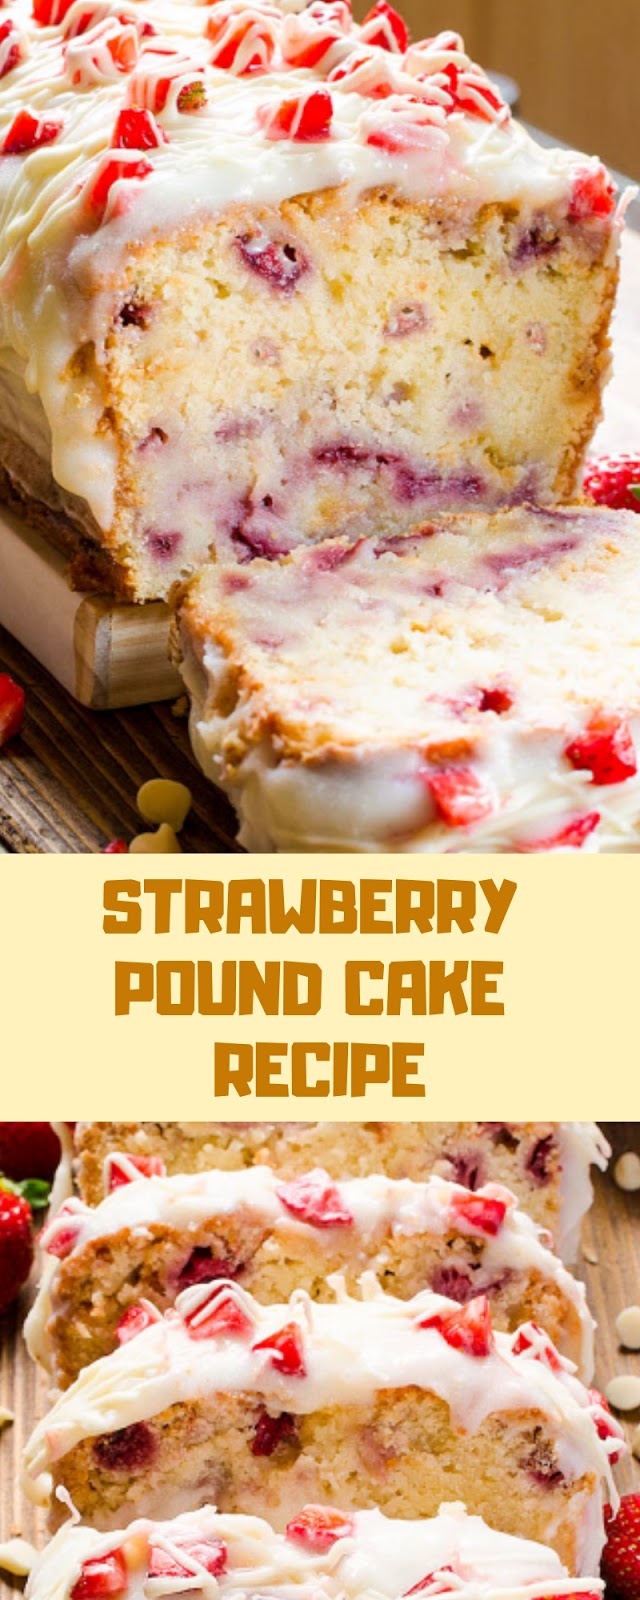 STRAWBERRY POUND CAKE RECIPE